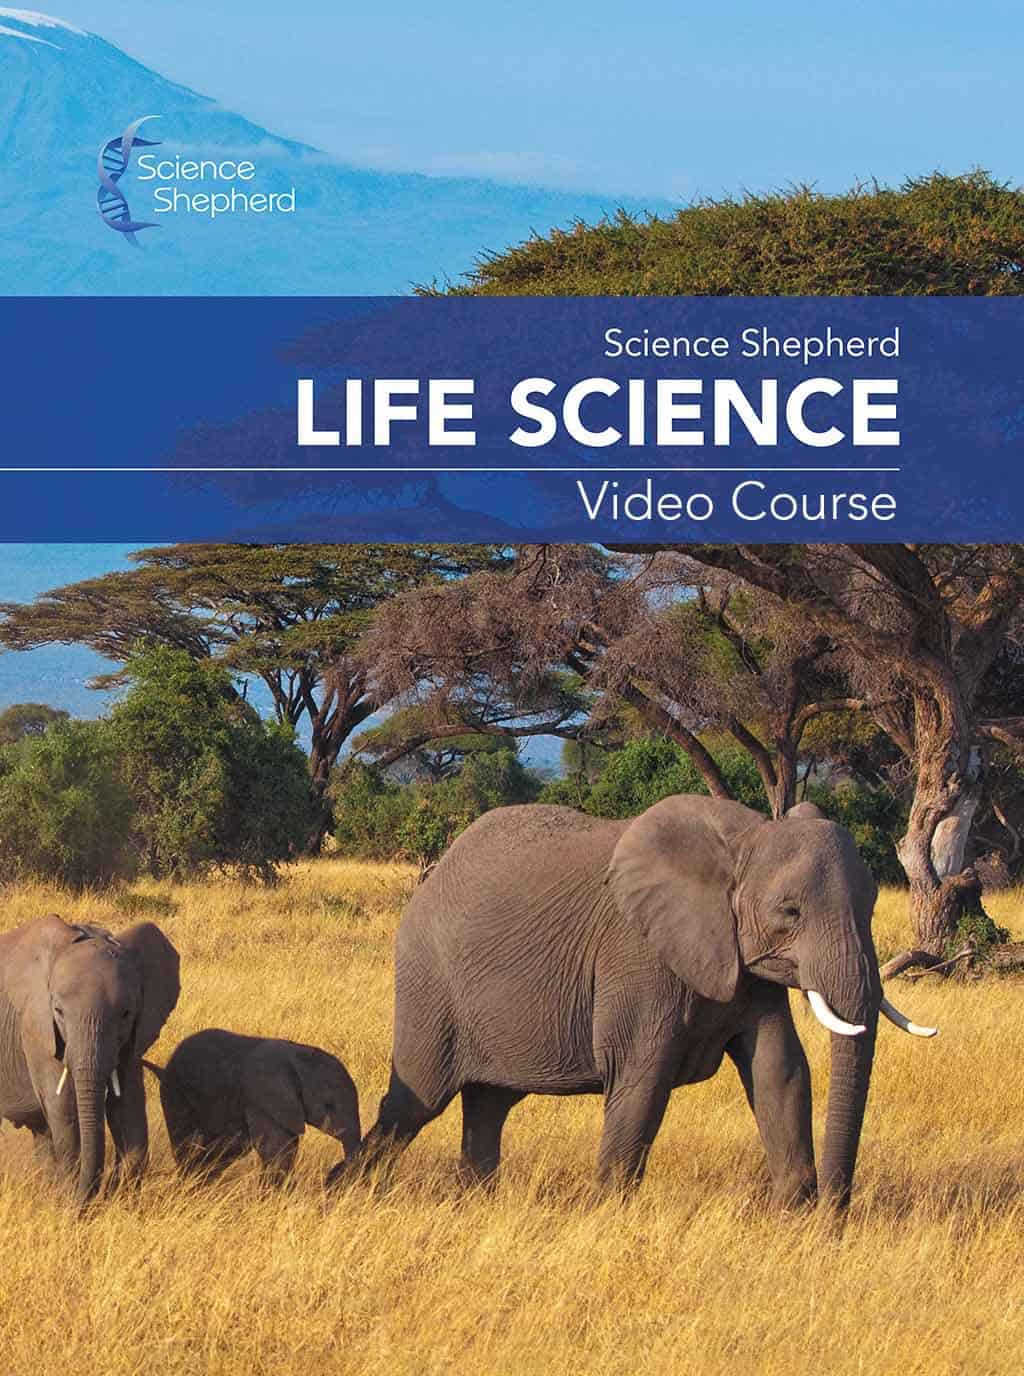 Science Shepherd Life Science homeschool video curriculum cover of elephants